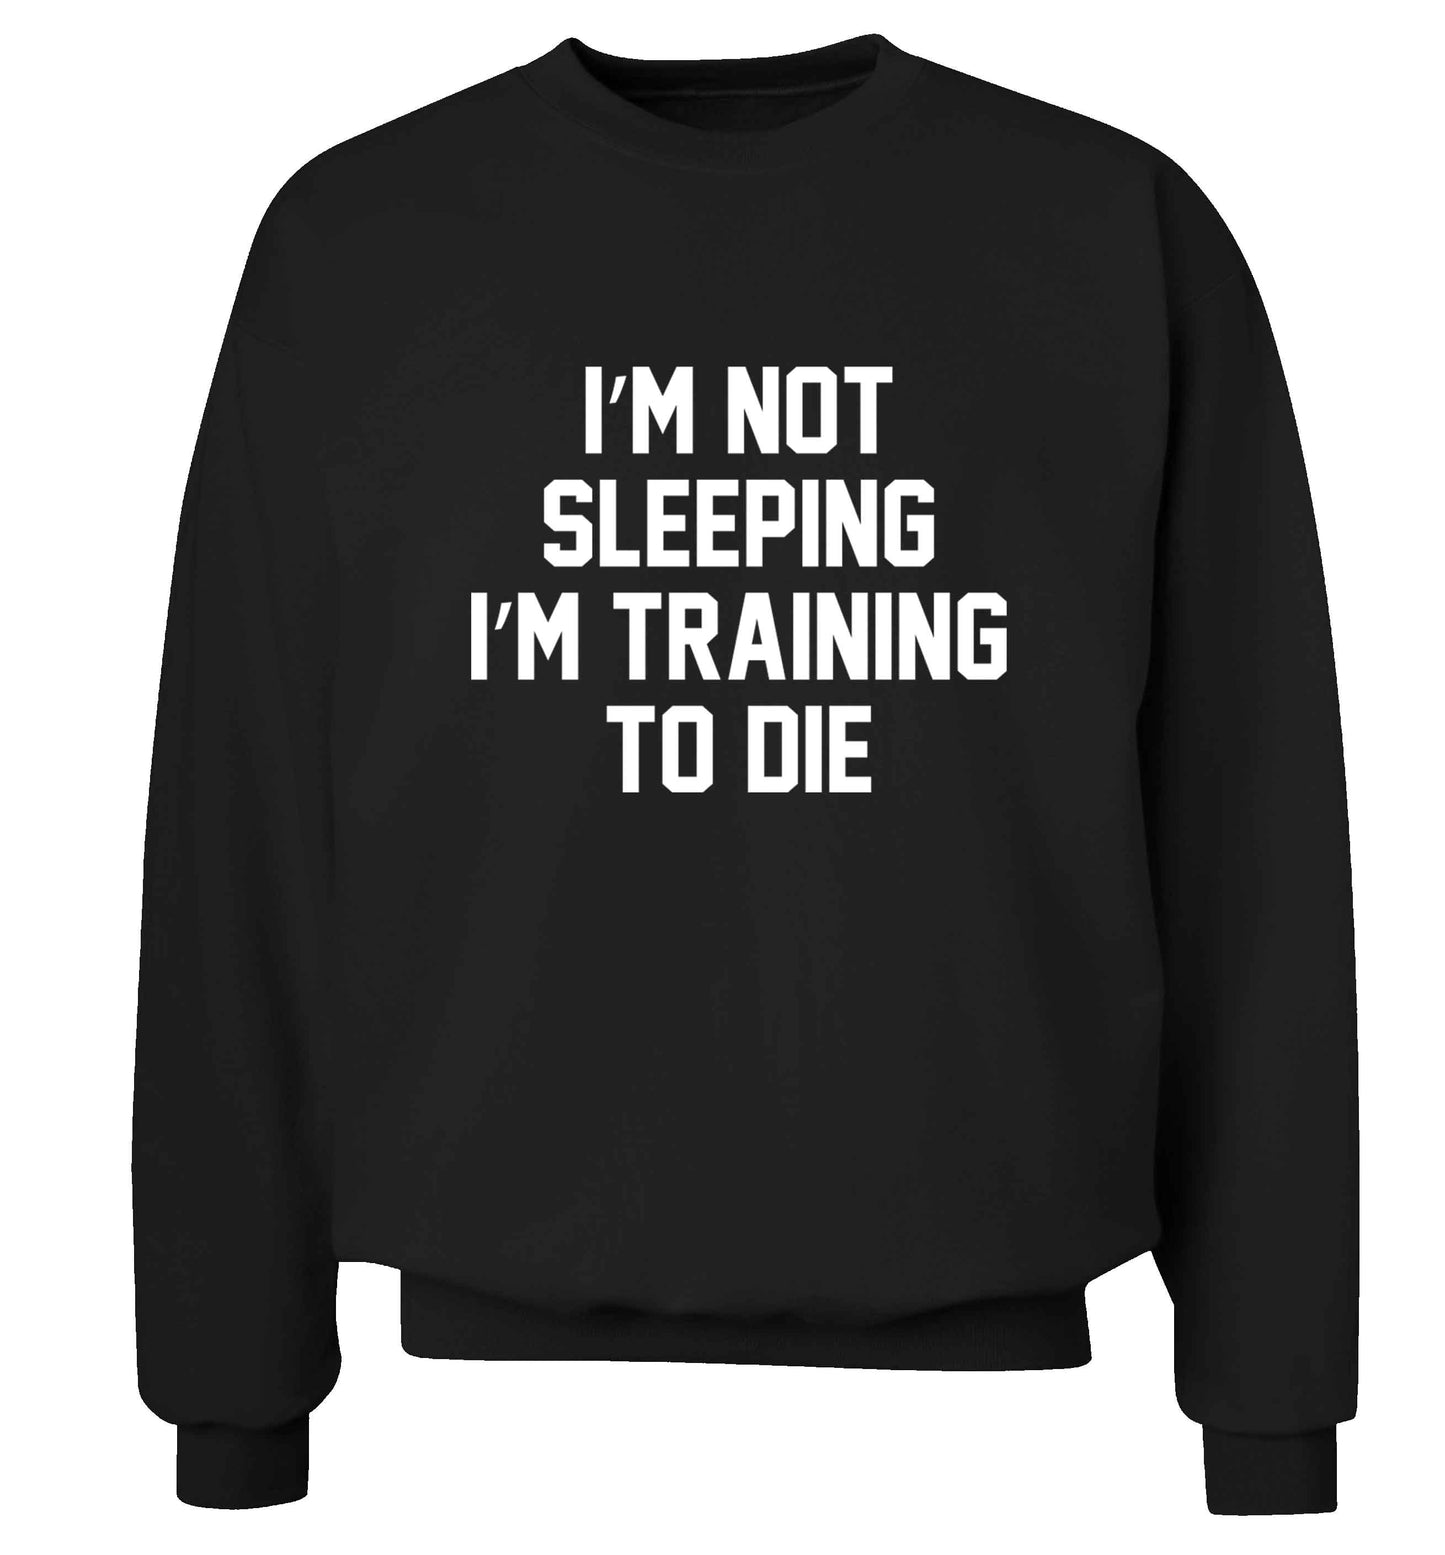 I'm not sleeping I'm training to die adult's unisex black sweater 2XL